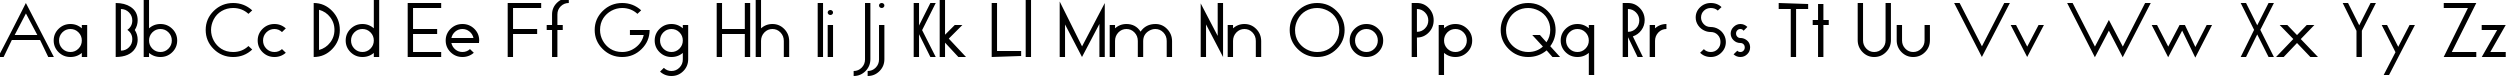 Пример написания английского алфавита шрифтом Ticker Tape